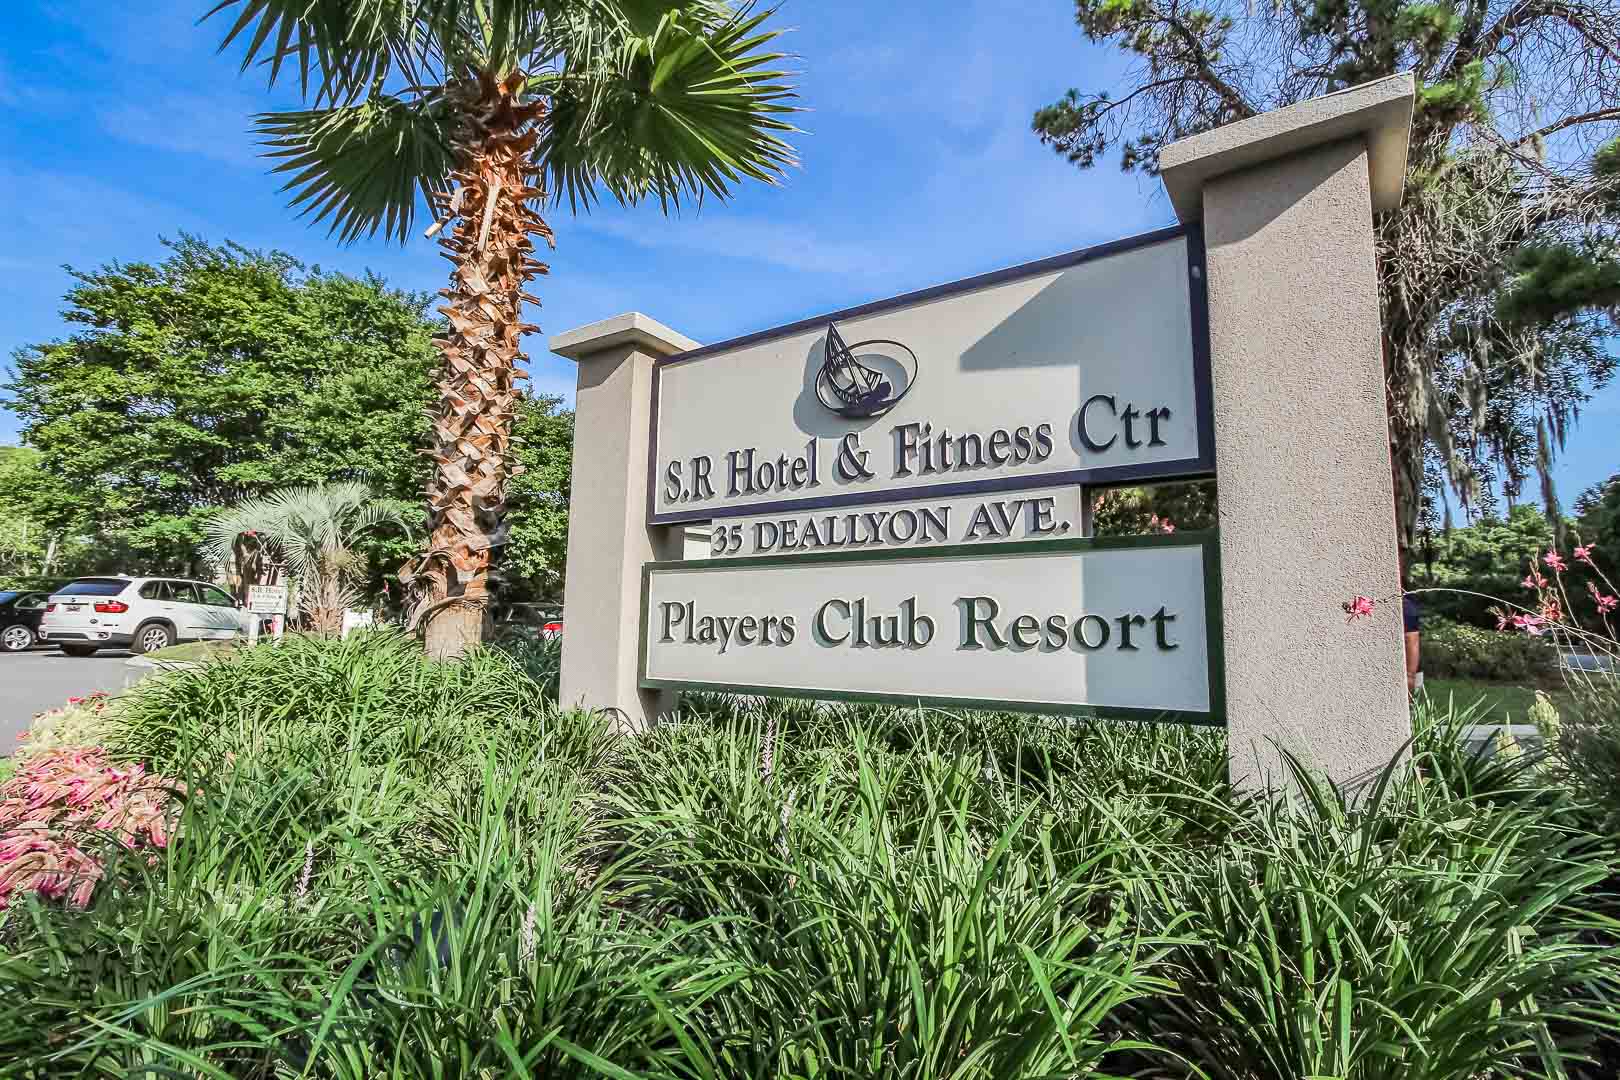 A welcoming resort signage at VRI's Players Club Resort in Hilton Head Island, South Carolina.